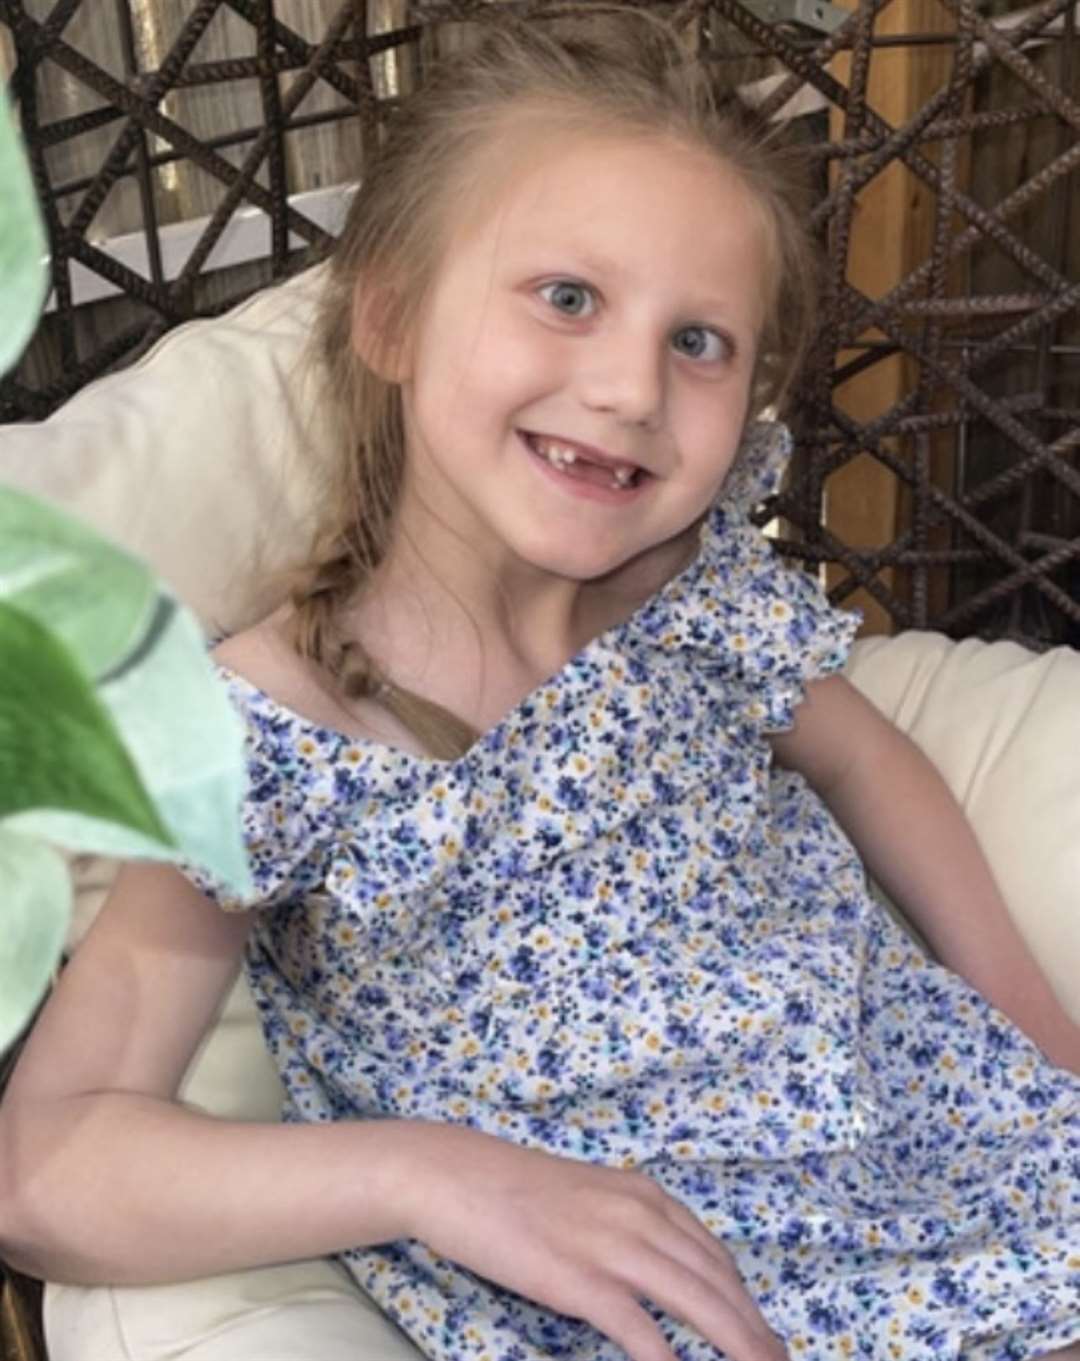 Lottie, seven, has an undiagnosed disability